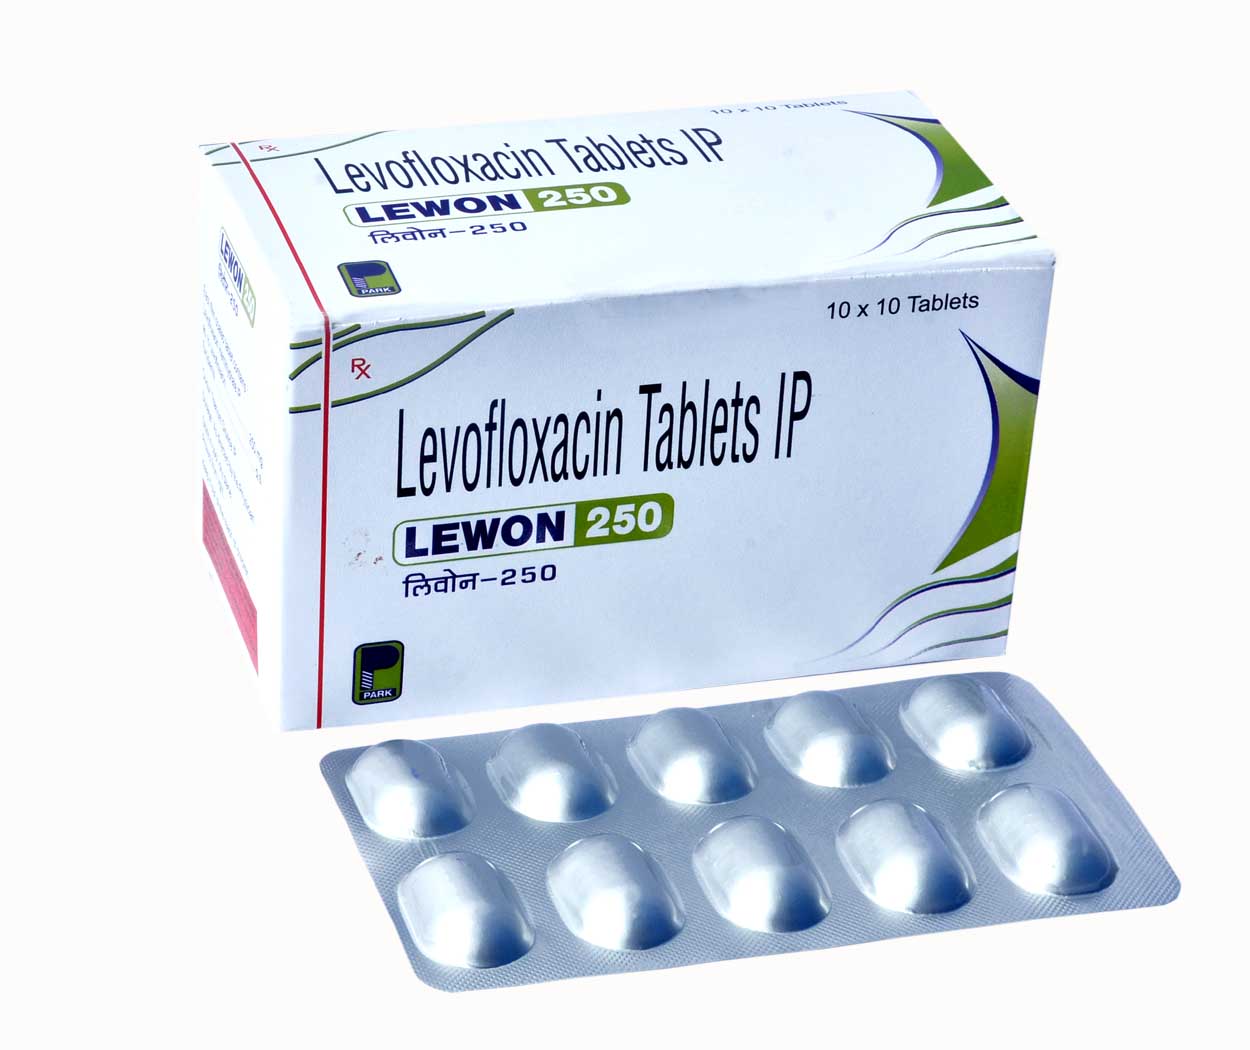 Product Name: LEWON 250, Compositions of LEWON 250 are Levofloxacin Tablets IP - Park Pharmaceuticals